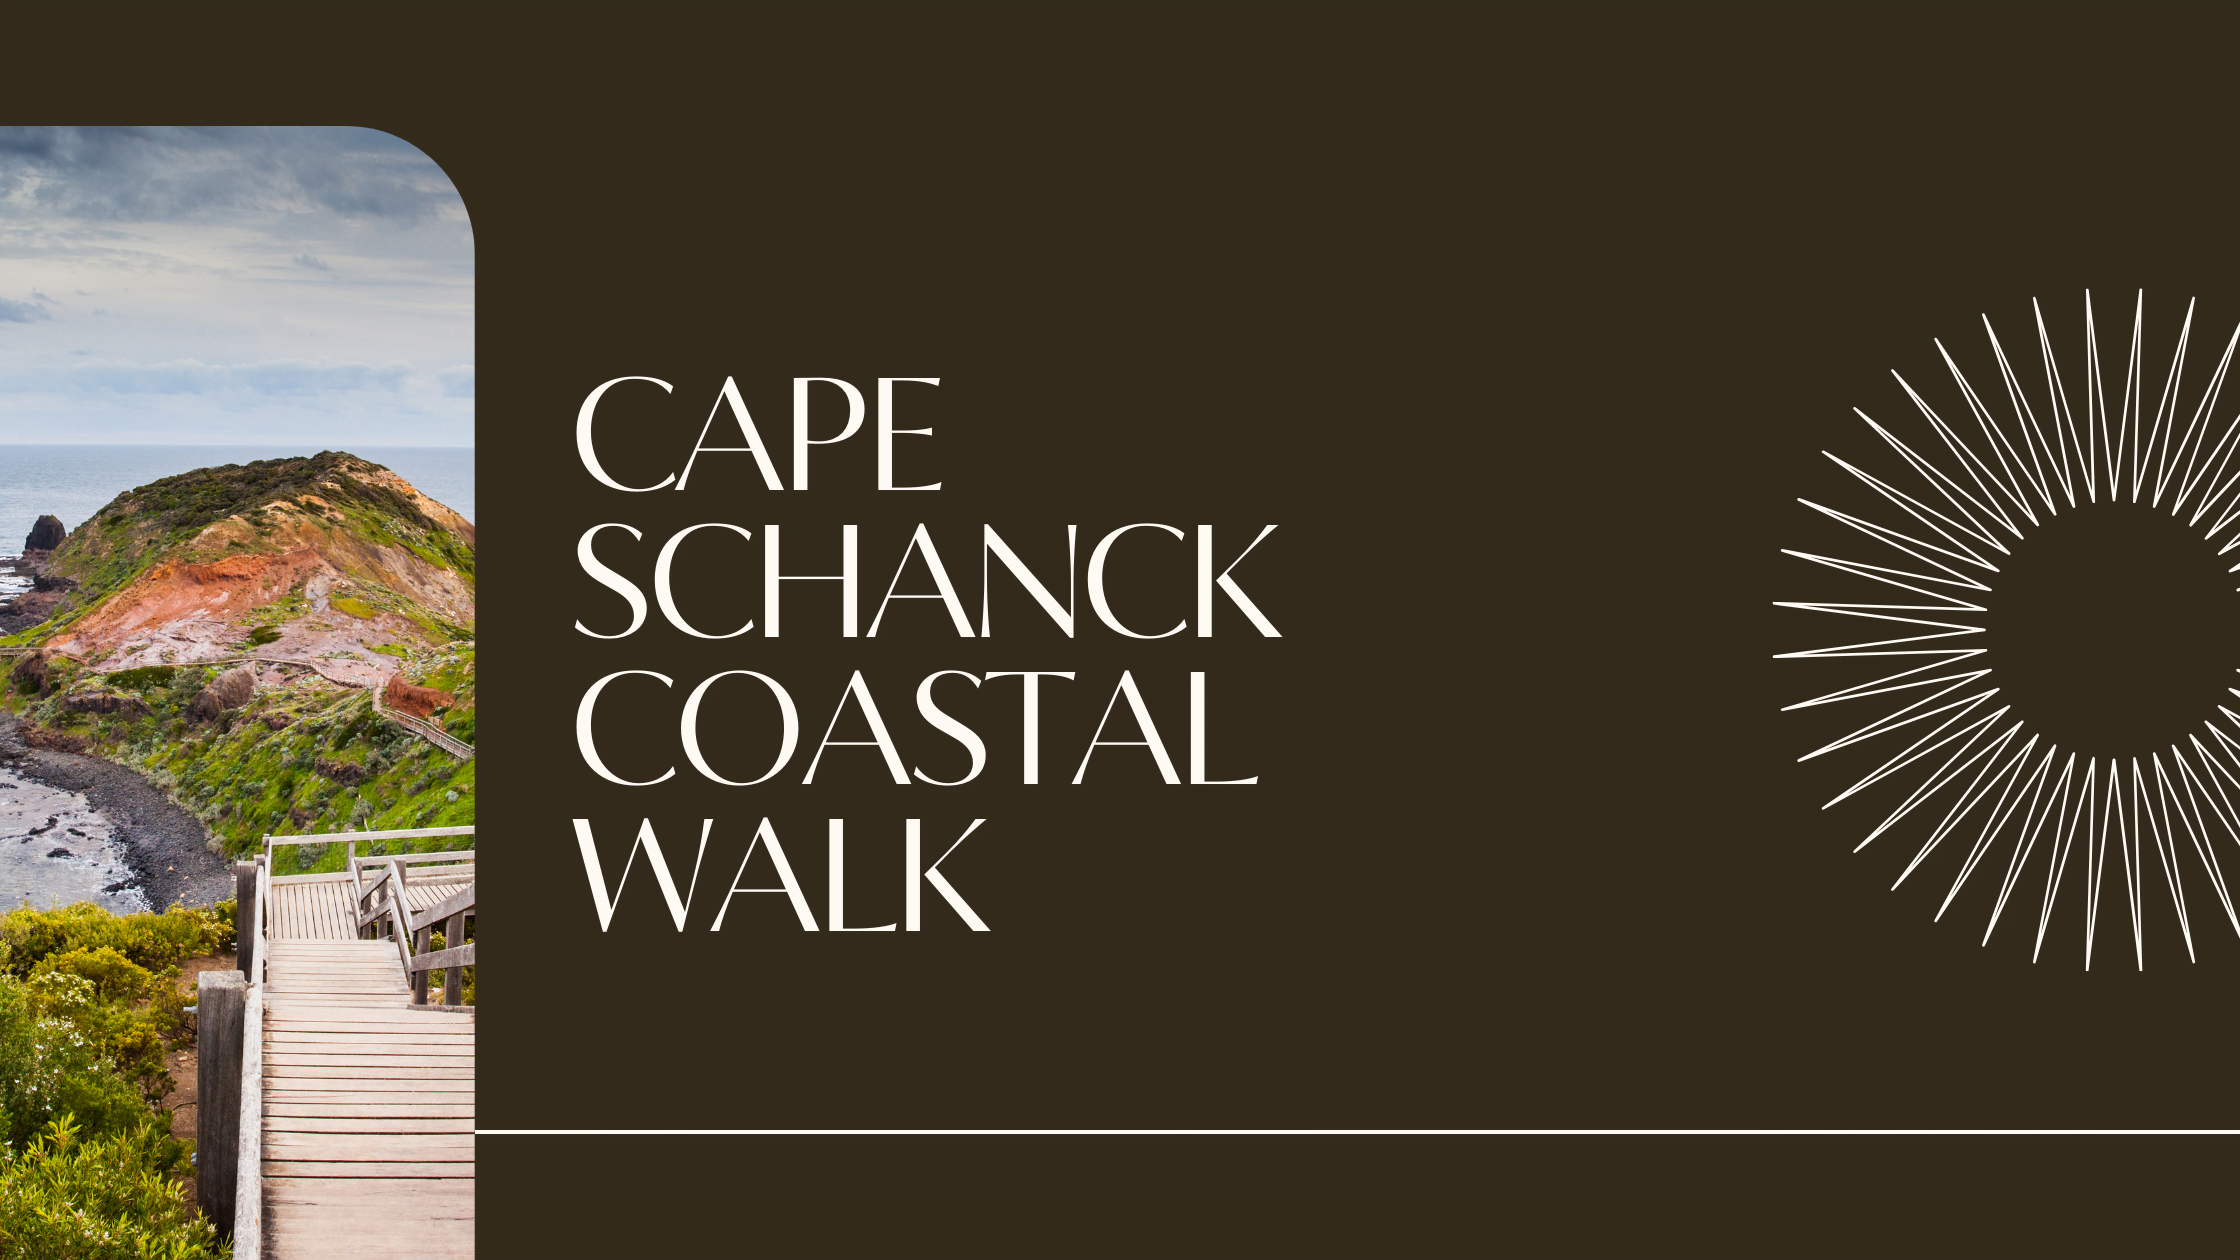 Cape Schanck Coastal Walk